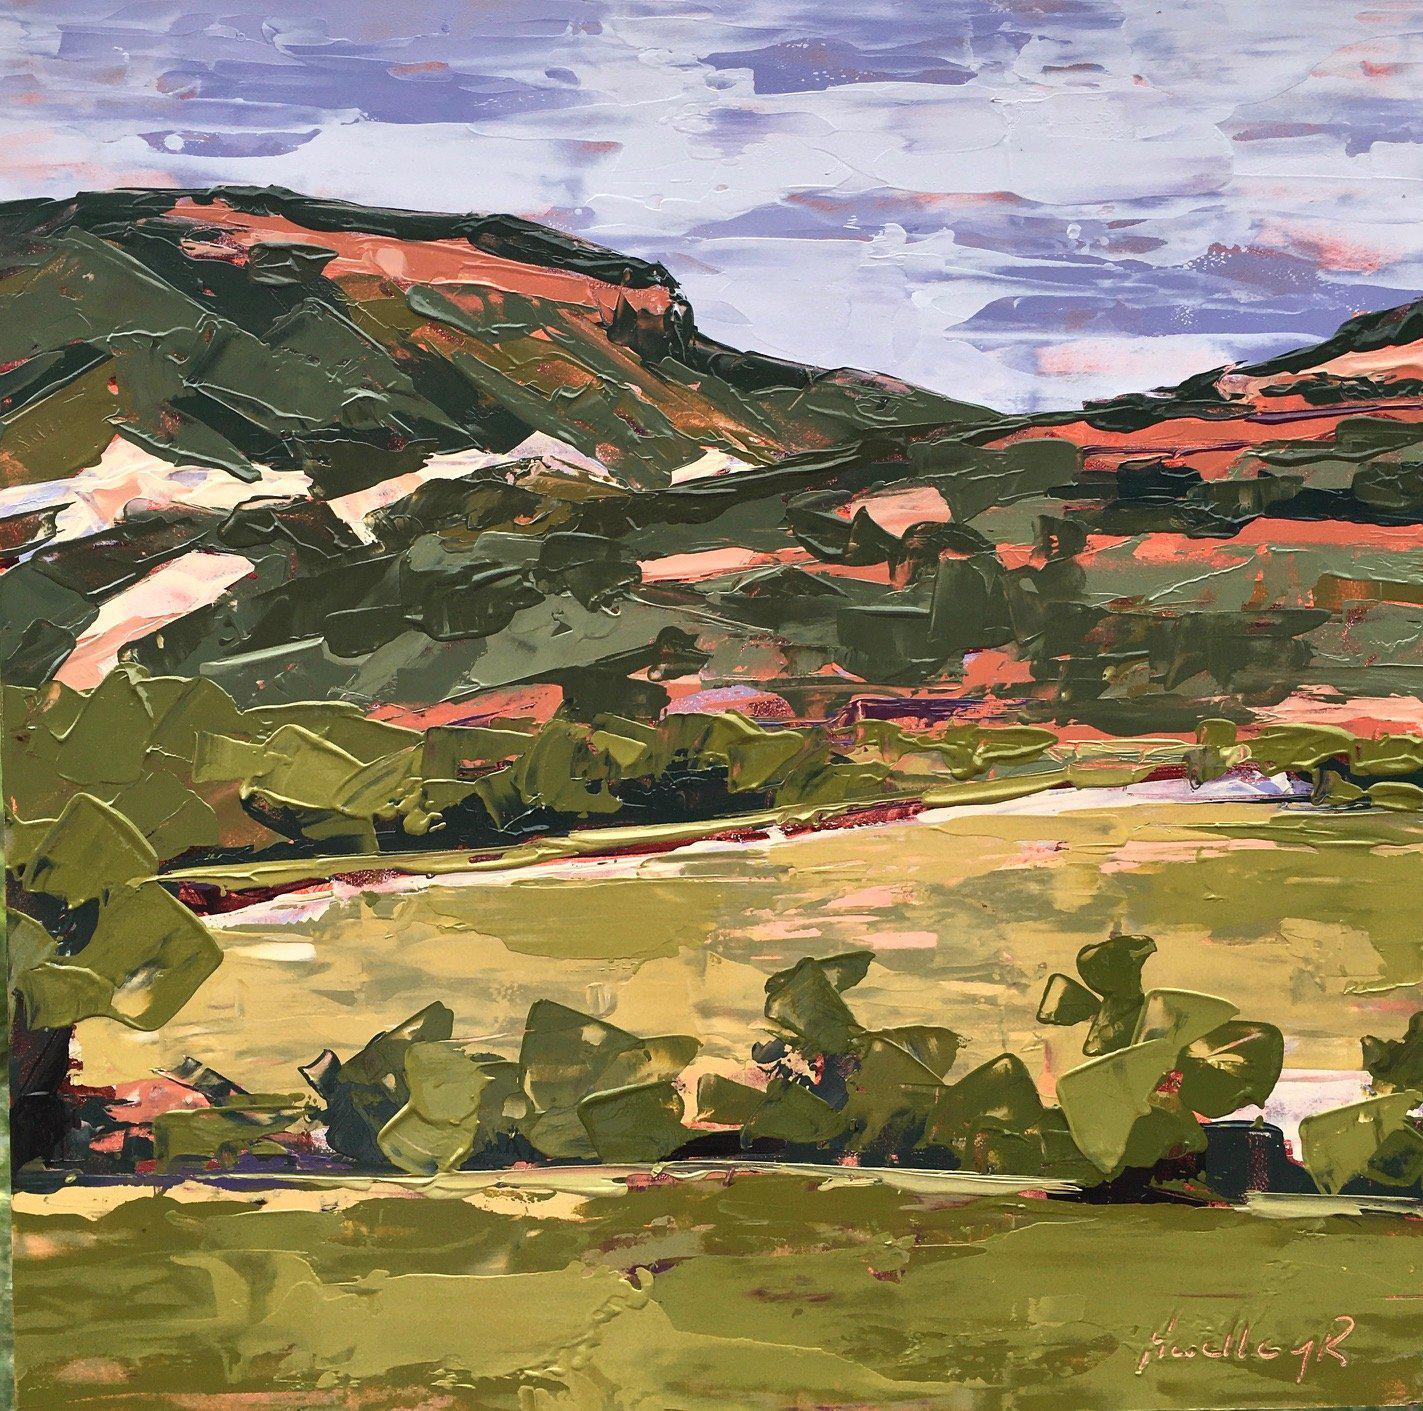 Hermosa Fields-Painting-Hadley Rampton-Sorrel Sky Gallery